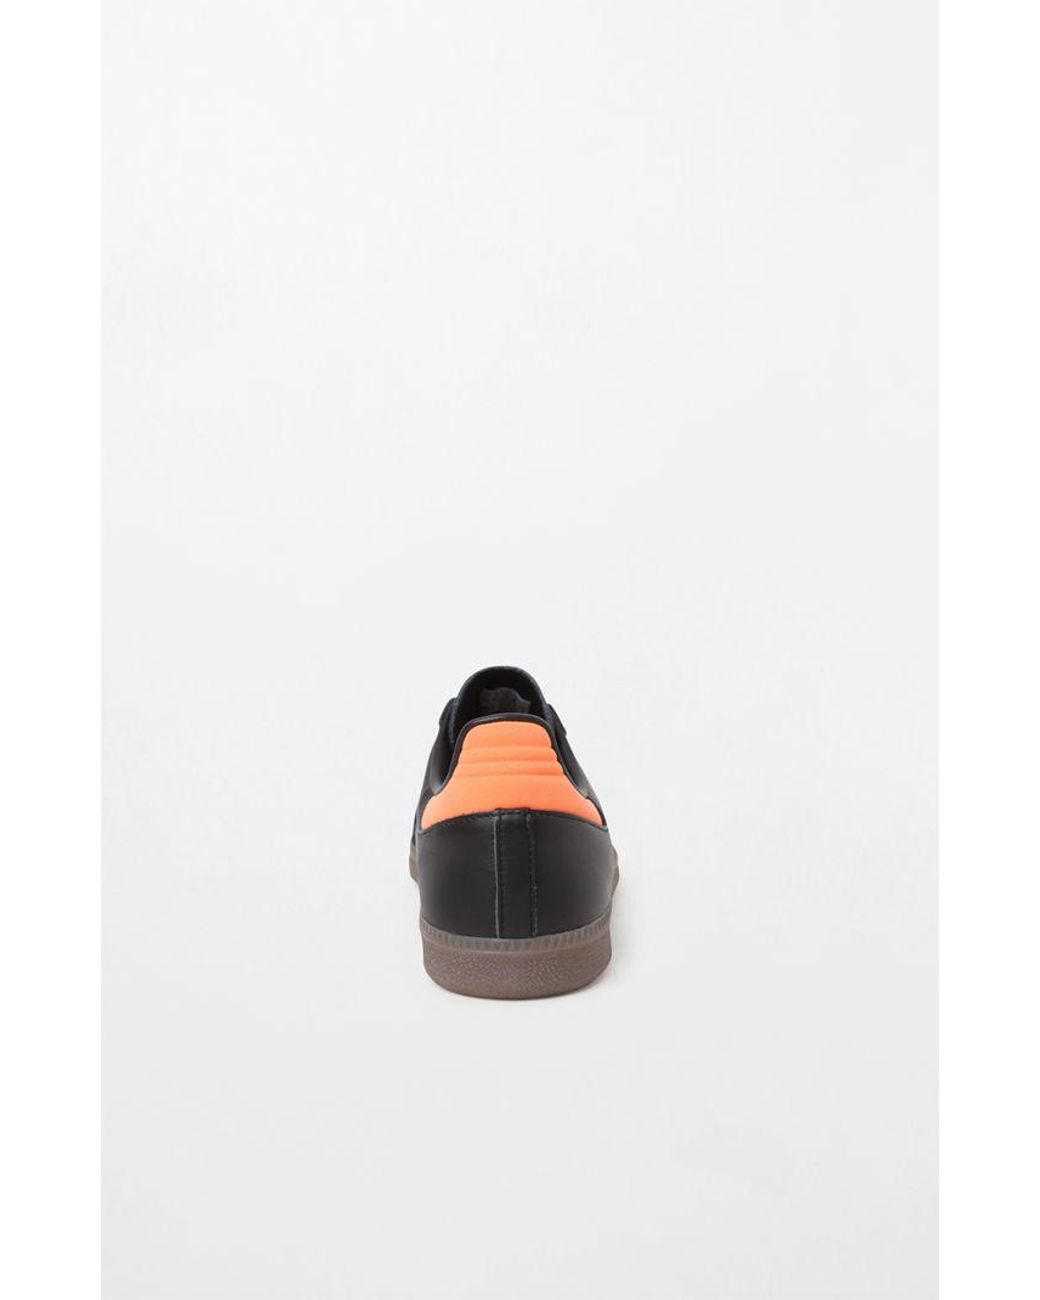 adidas Rubber Samba Og Black & Orange Shoes for Men | Lyst